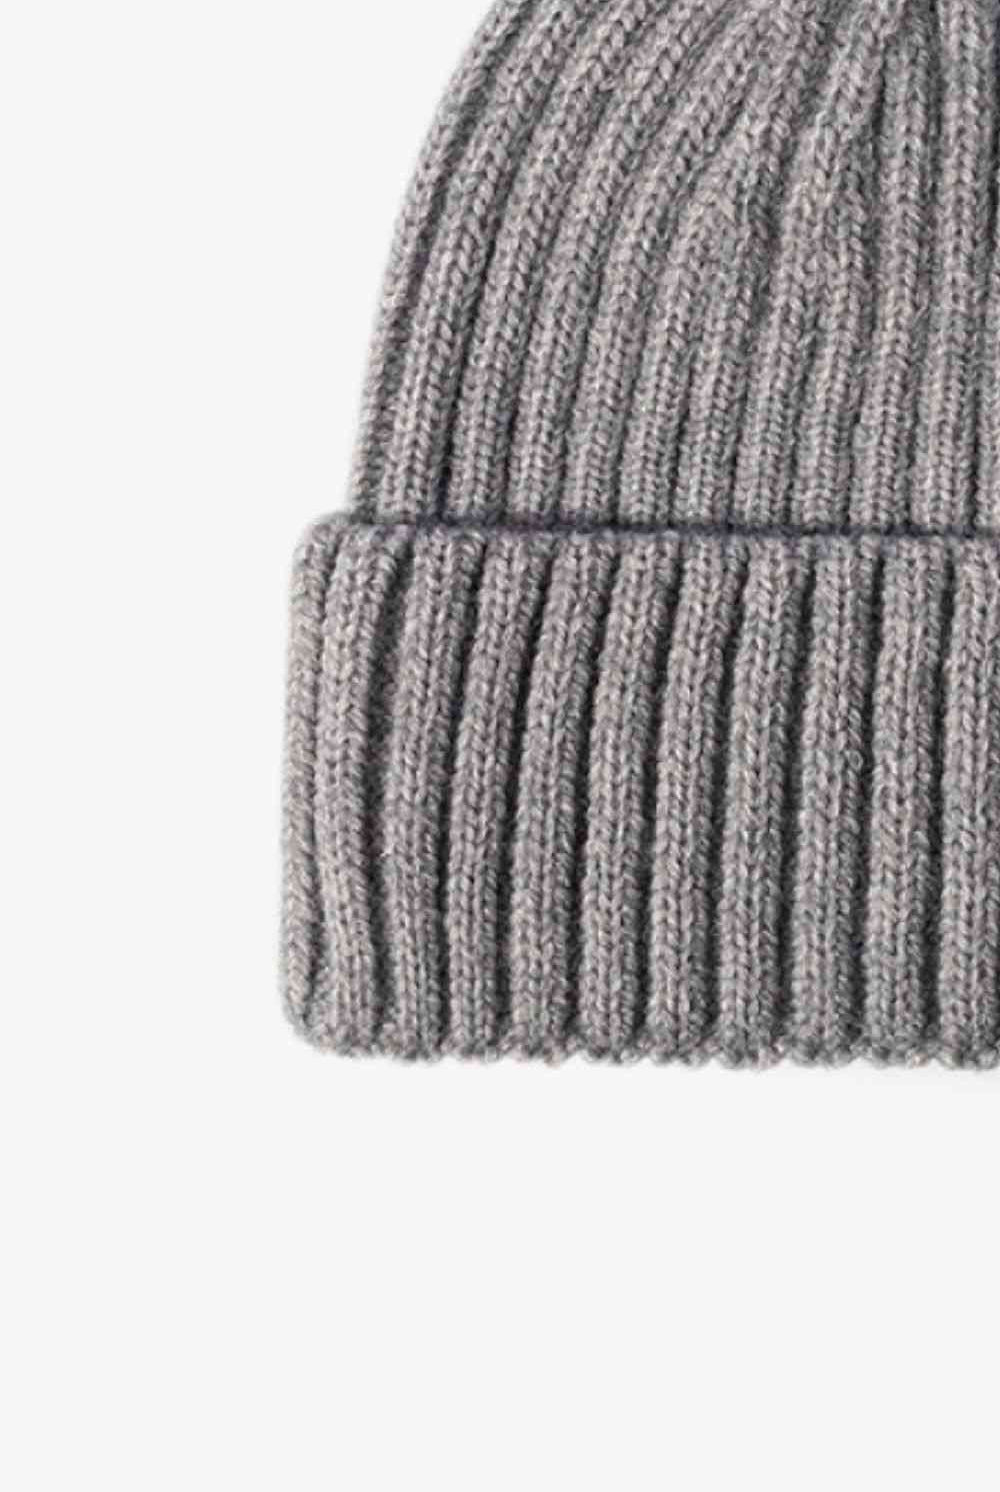 Dim Gray Rib-Knit Cuff Beanie Winter Accessories